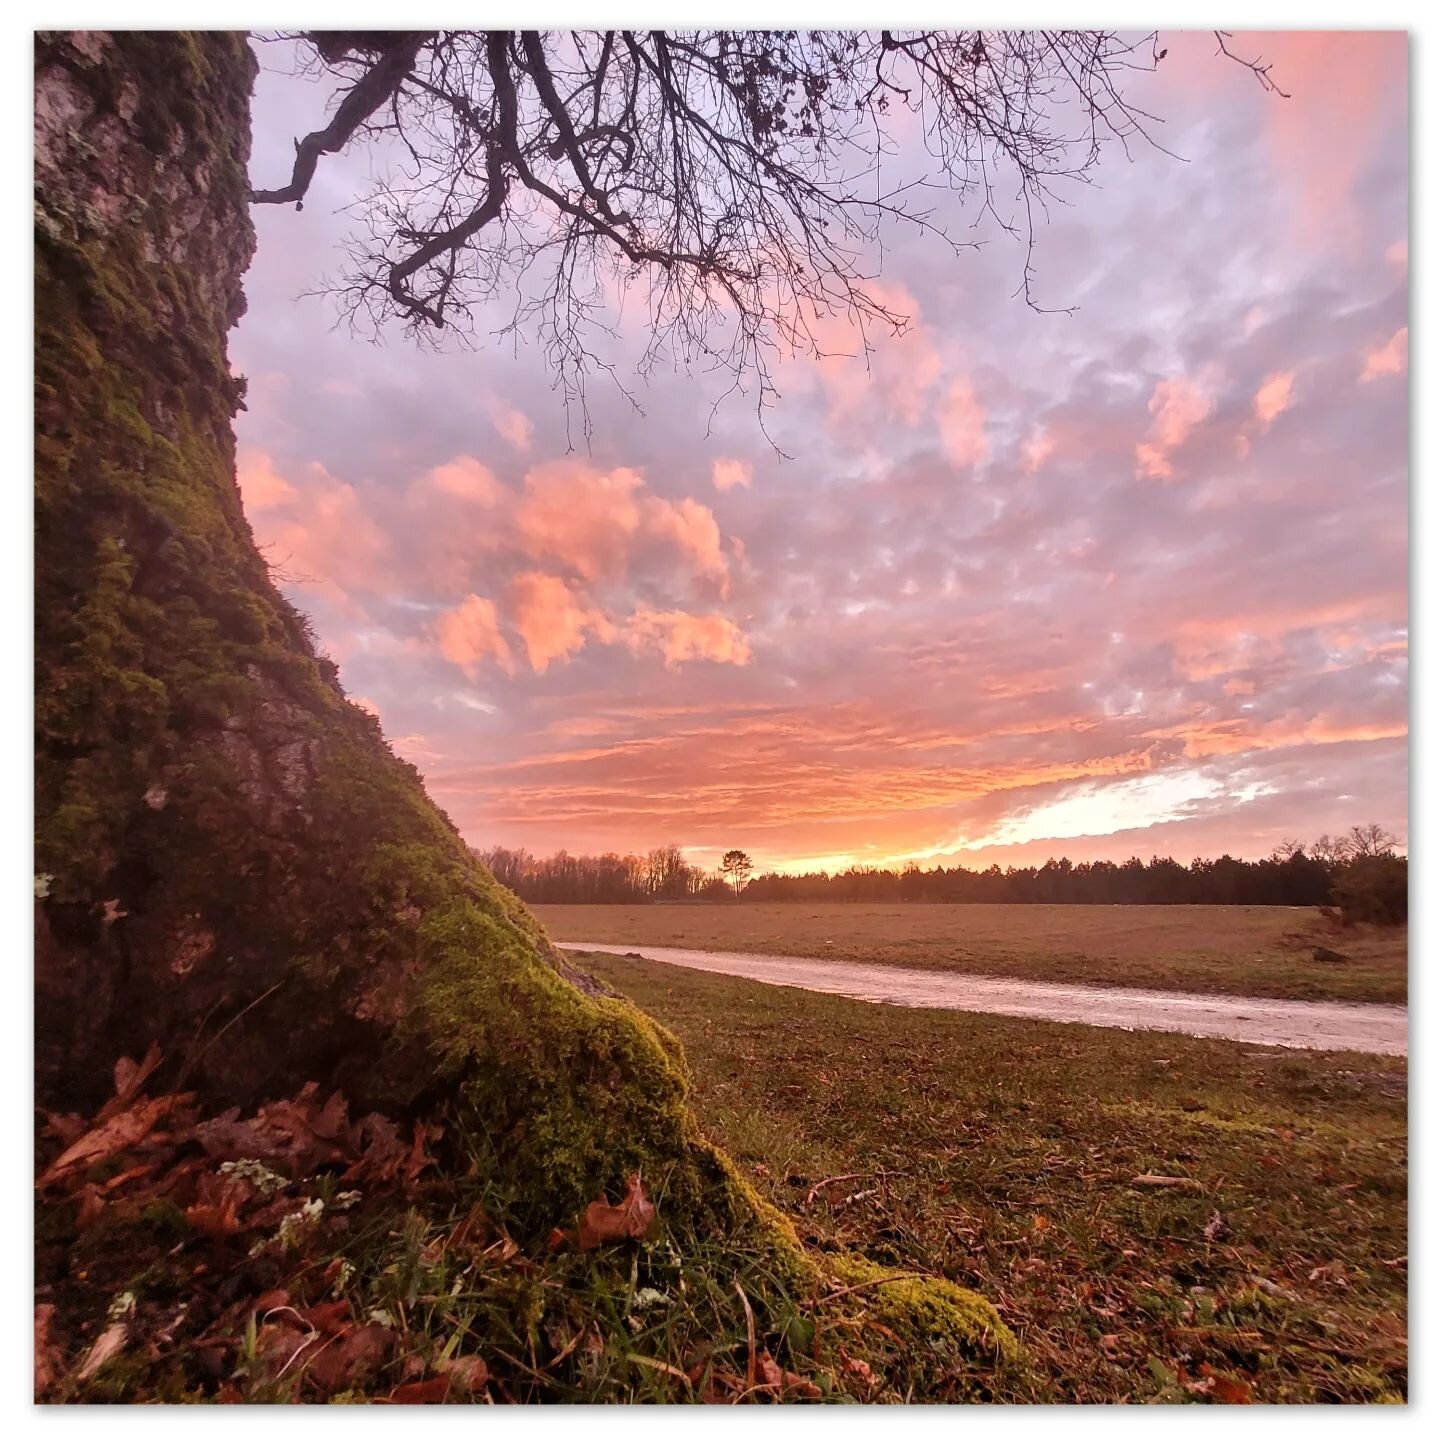 Belle soir&eacute;e m&eacute;docaine 
#sunset 
#tree
#sunsetlovers 
#sunsetphotography 
#enjoy 
#nature 
#welovenature